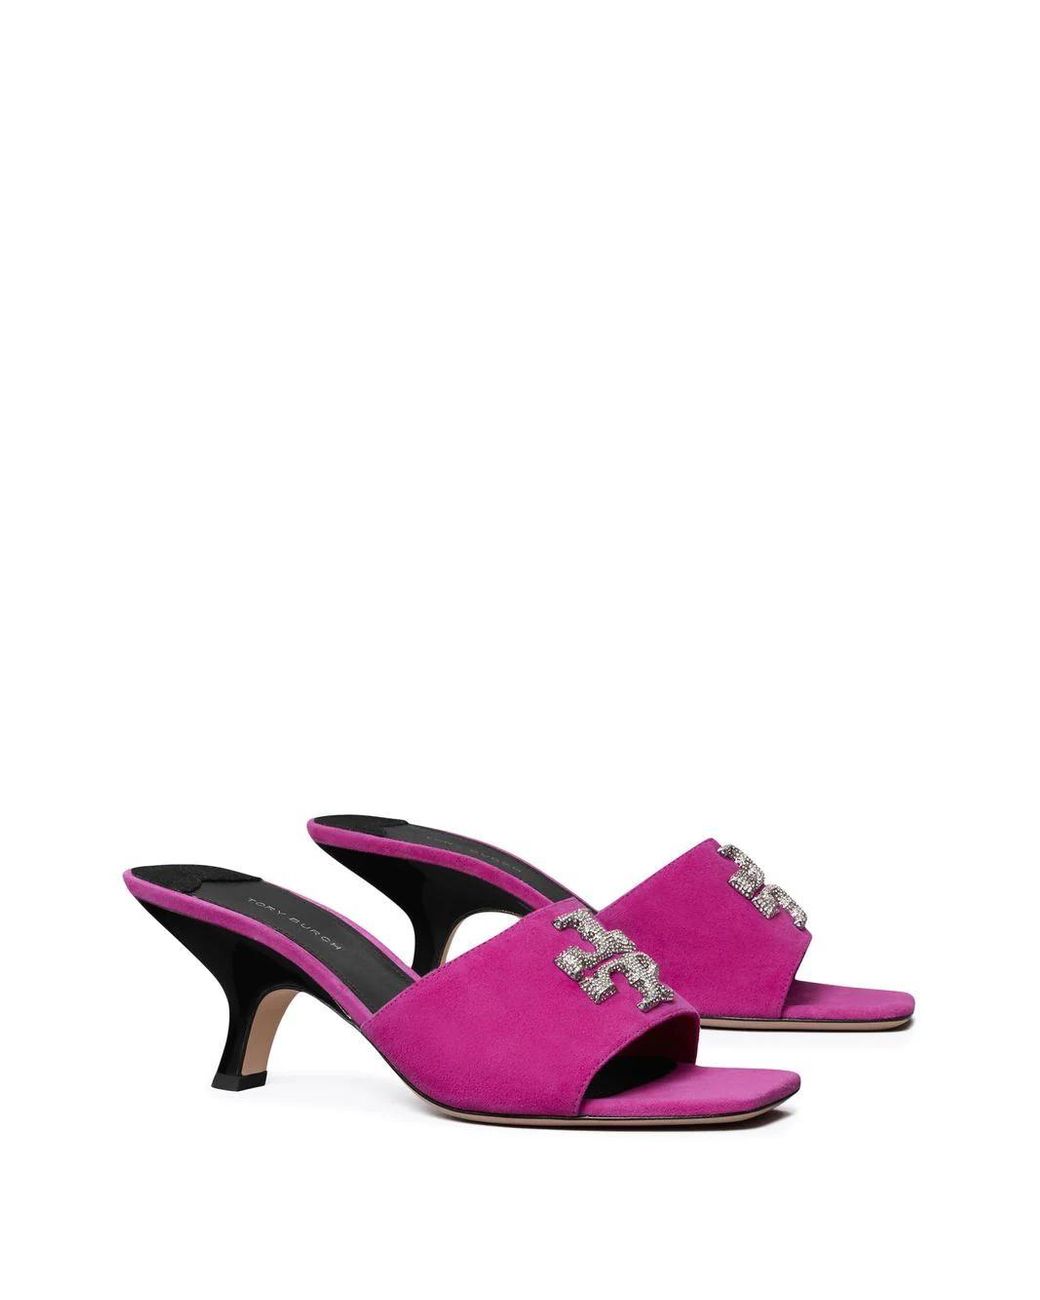 Tory Burch Eleanor Pave 65mm Mule Sandal in Pink | Lyst UK